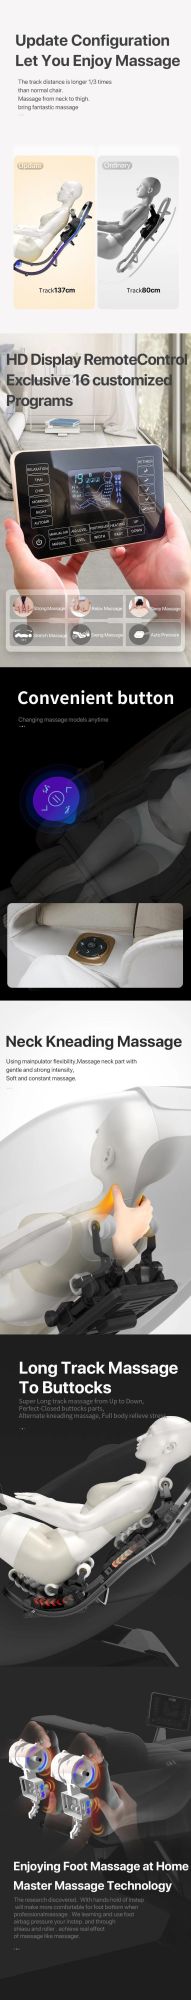 Champagne Color Healthcare Zero Gravity Recliner Massage Chair